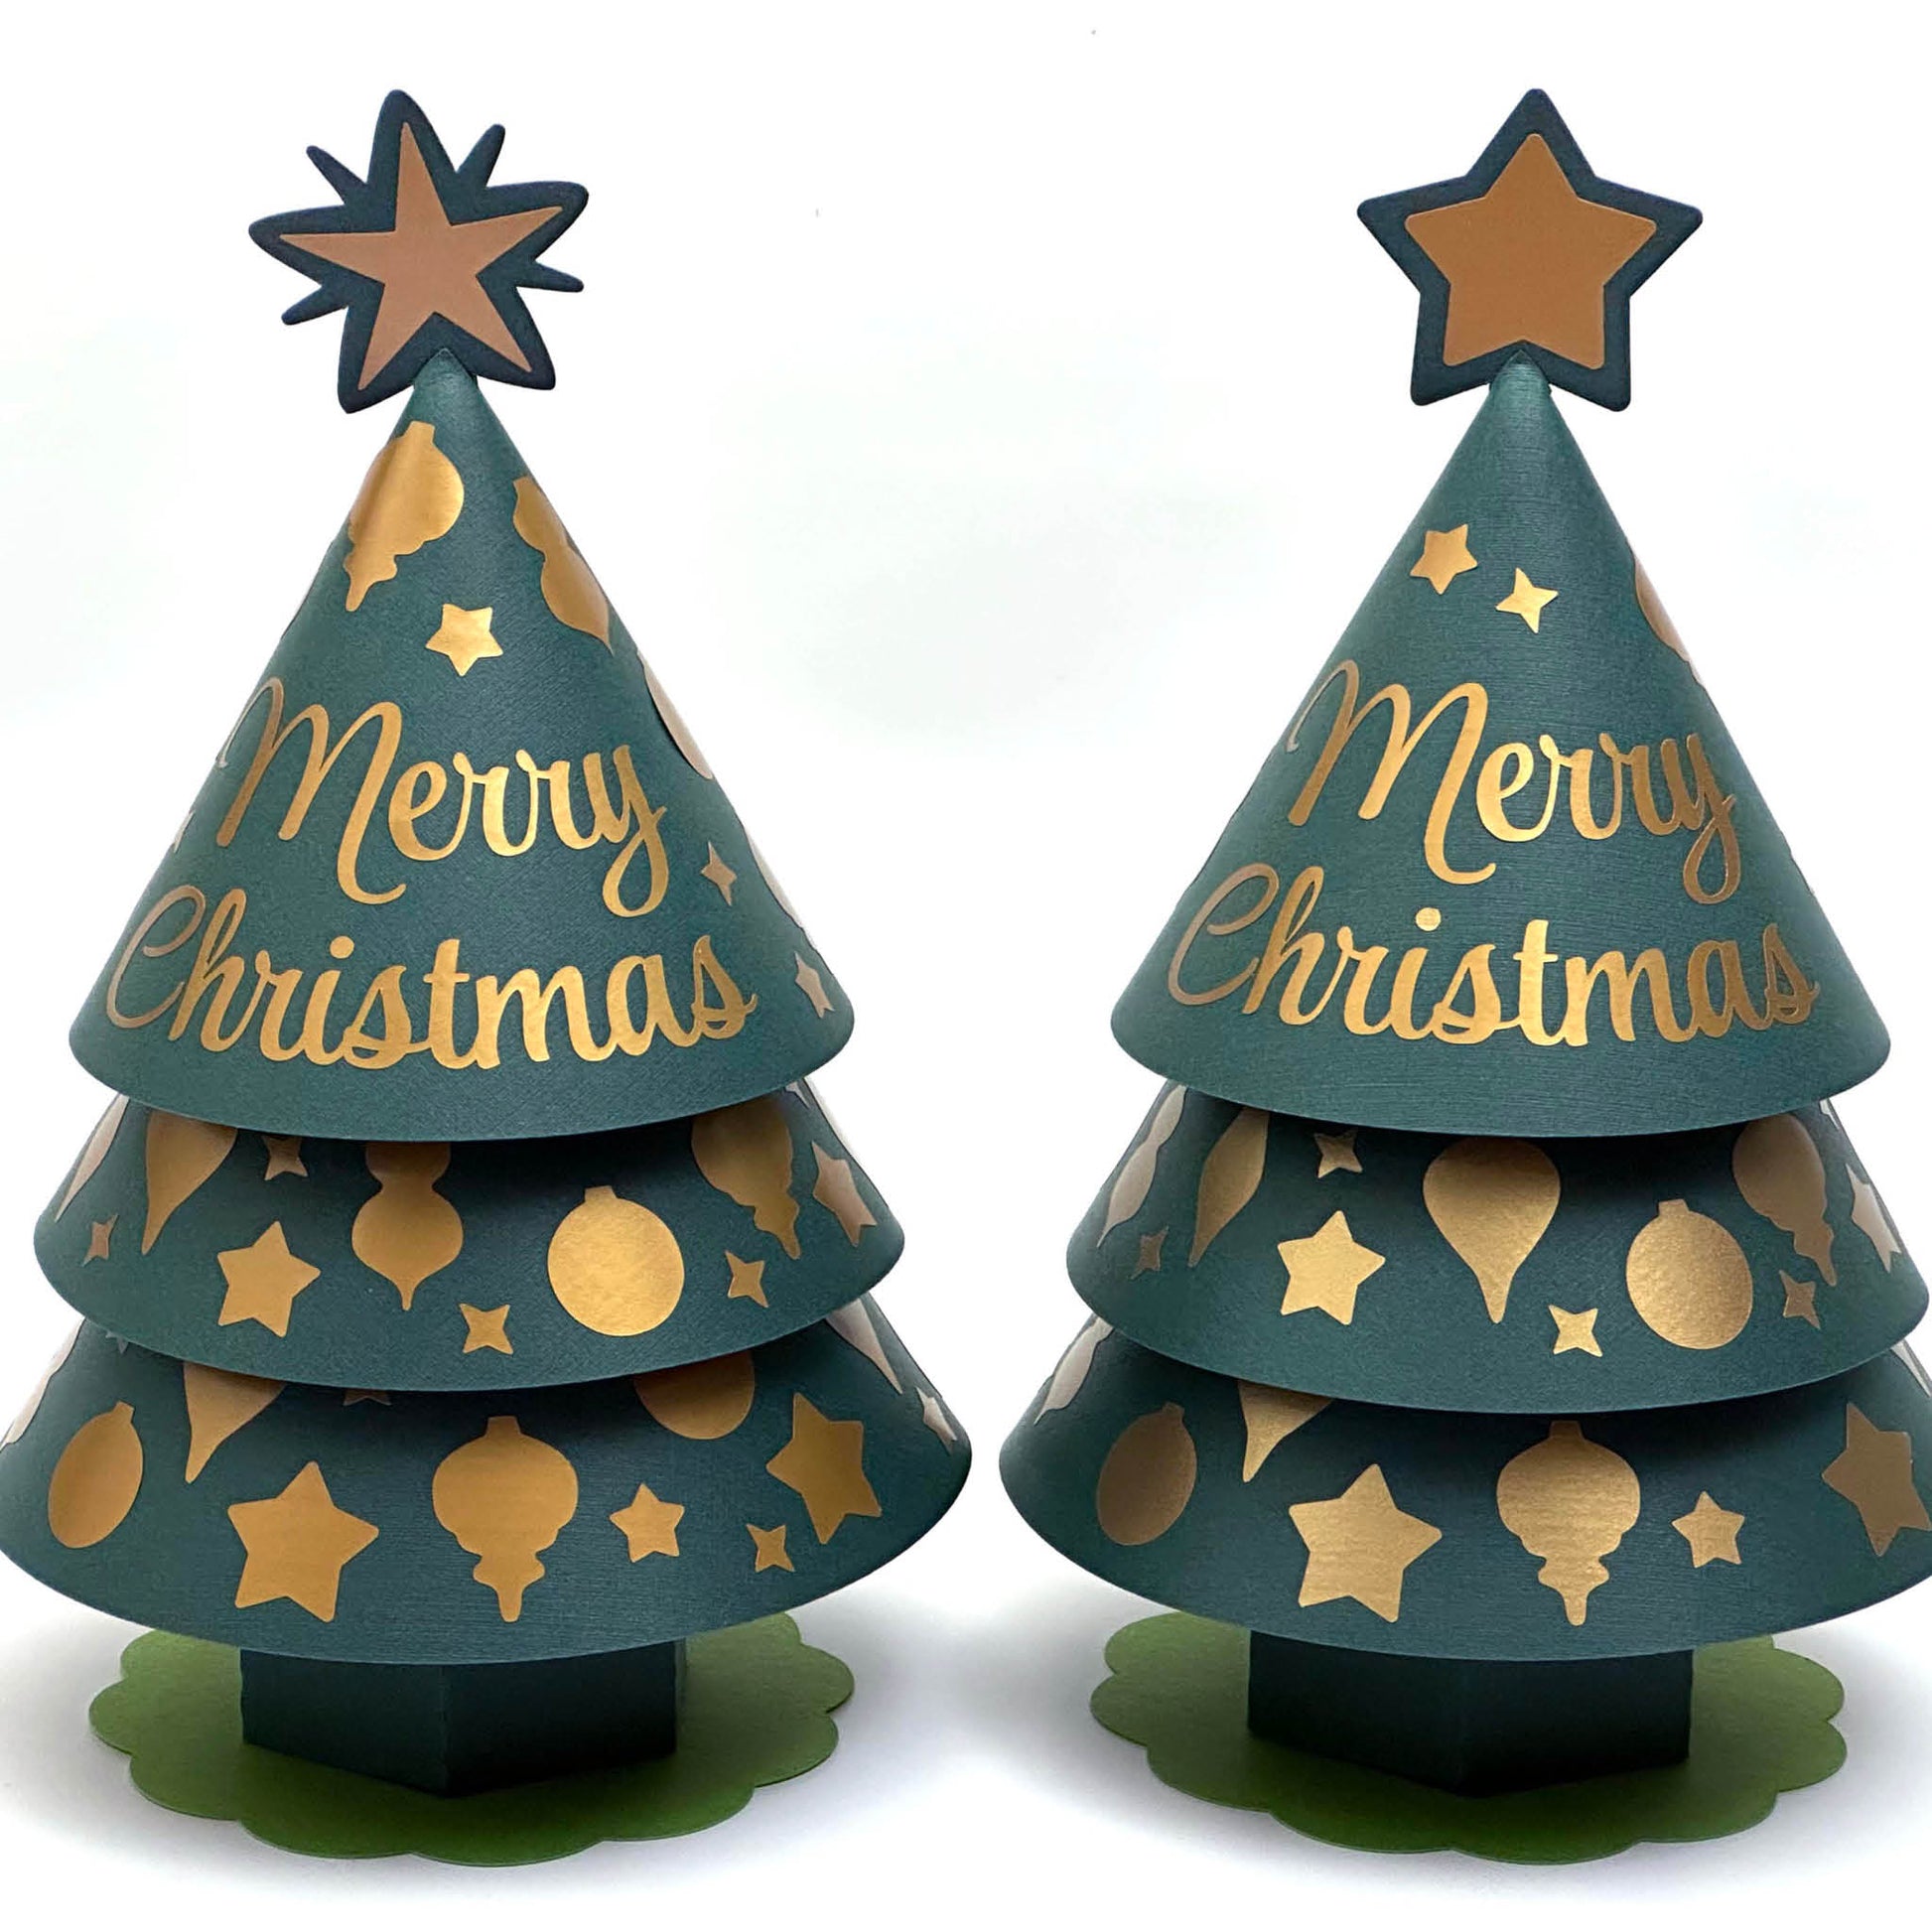 Tree Ornament Box SVG - SVG Files For Cricut and Silhouette 